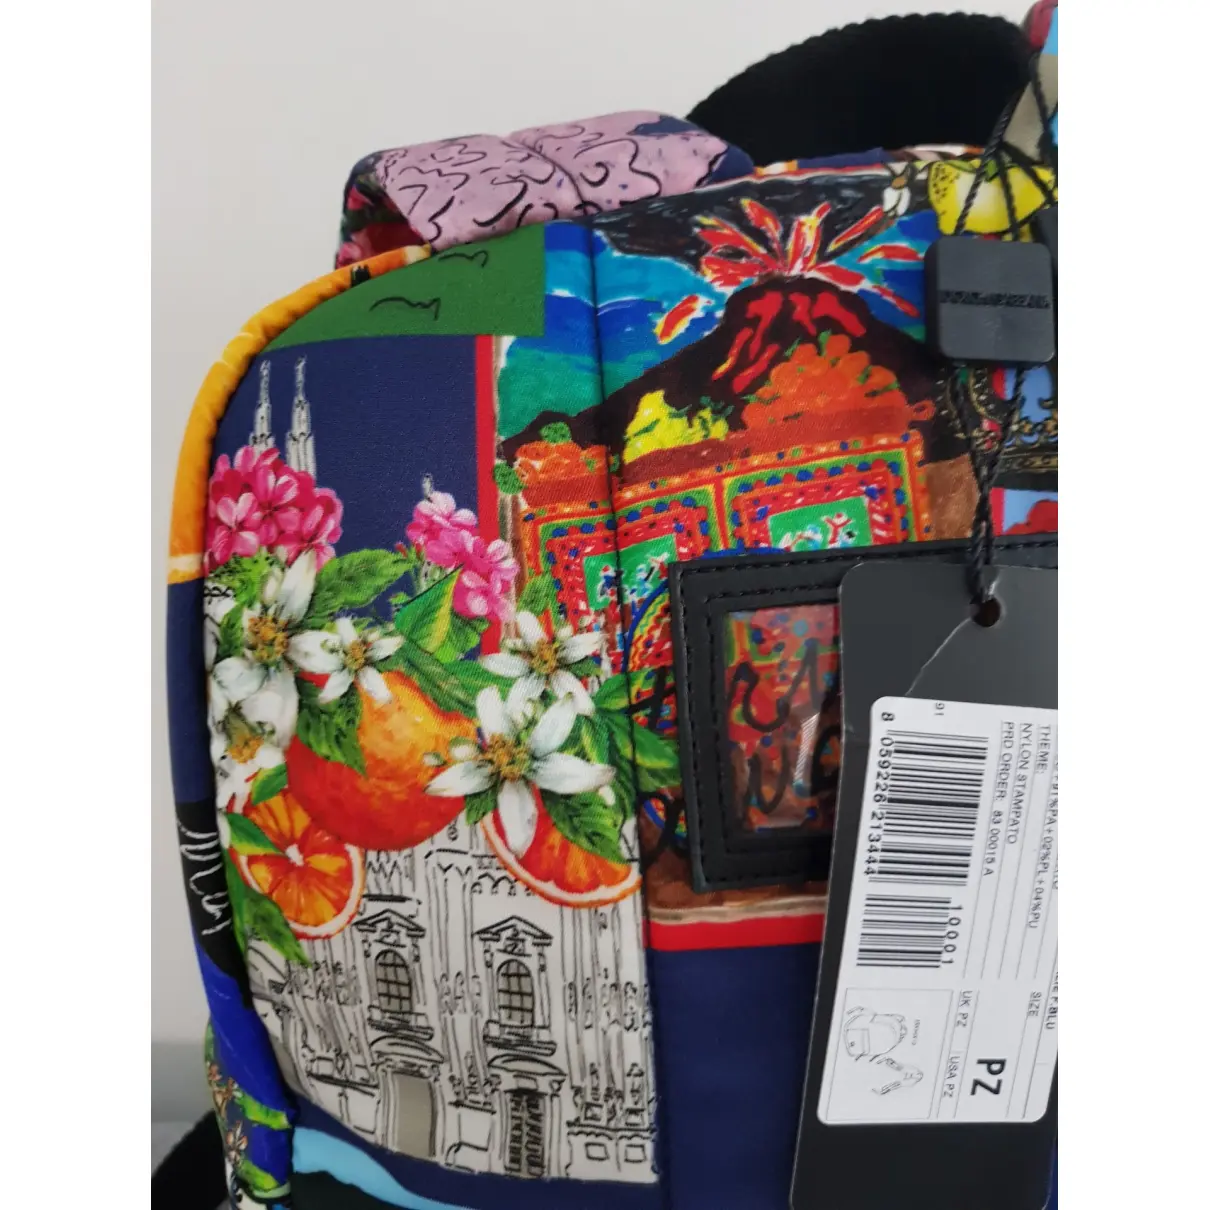 Cloth backpack Dolce & Gabbana